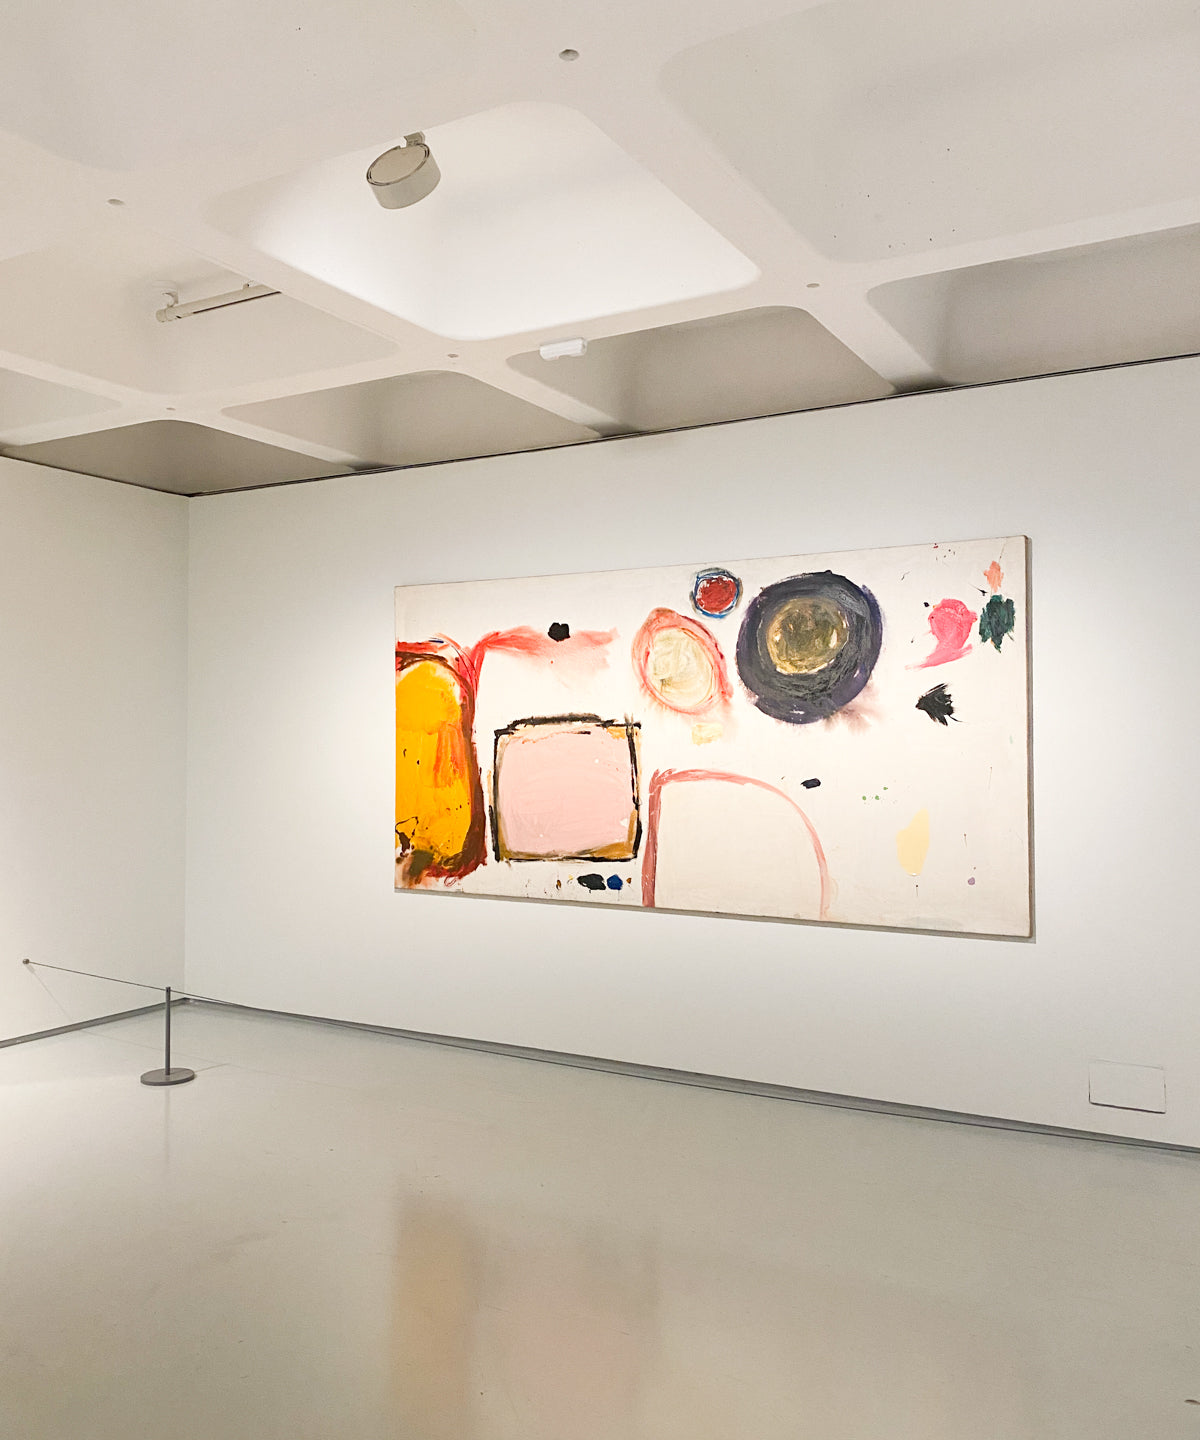 Postwar Modern Exhibit at the Barbican Gallery